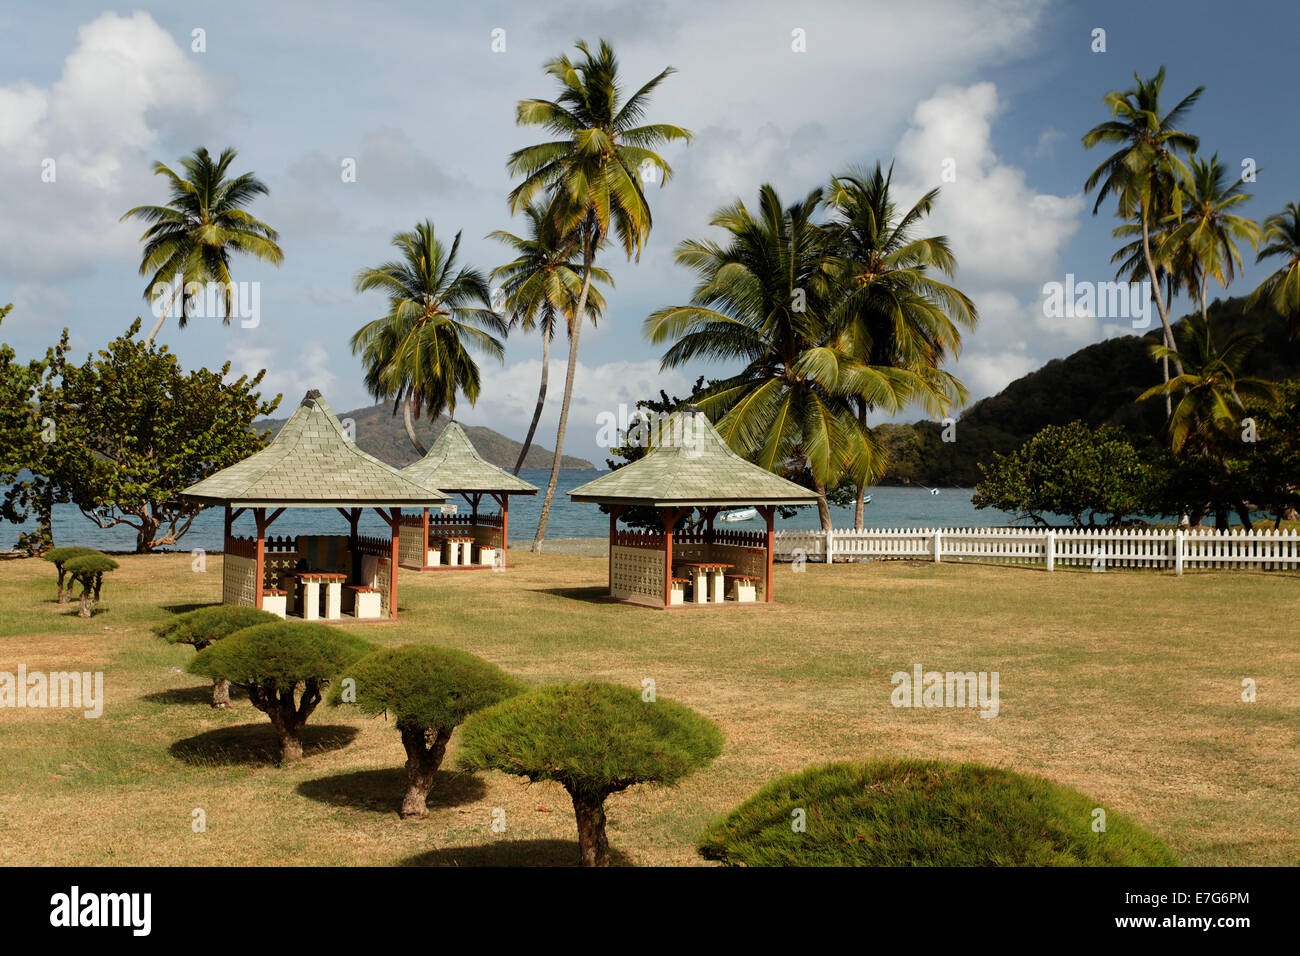 Barbecue huts on the beach, coconut trees, Speyside, Tobago, Trinidad and Tobago Stock Photo